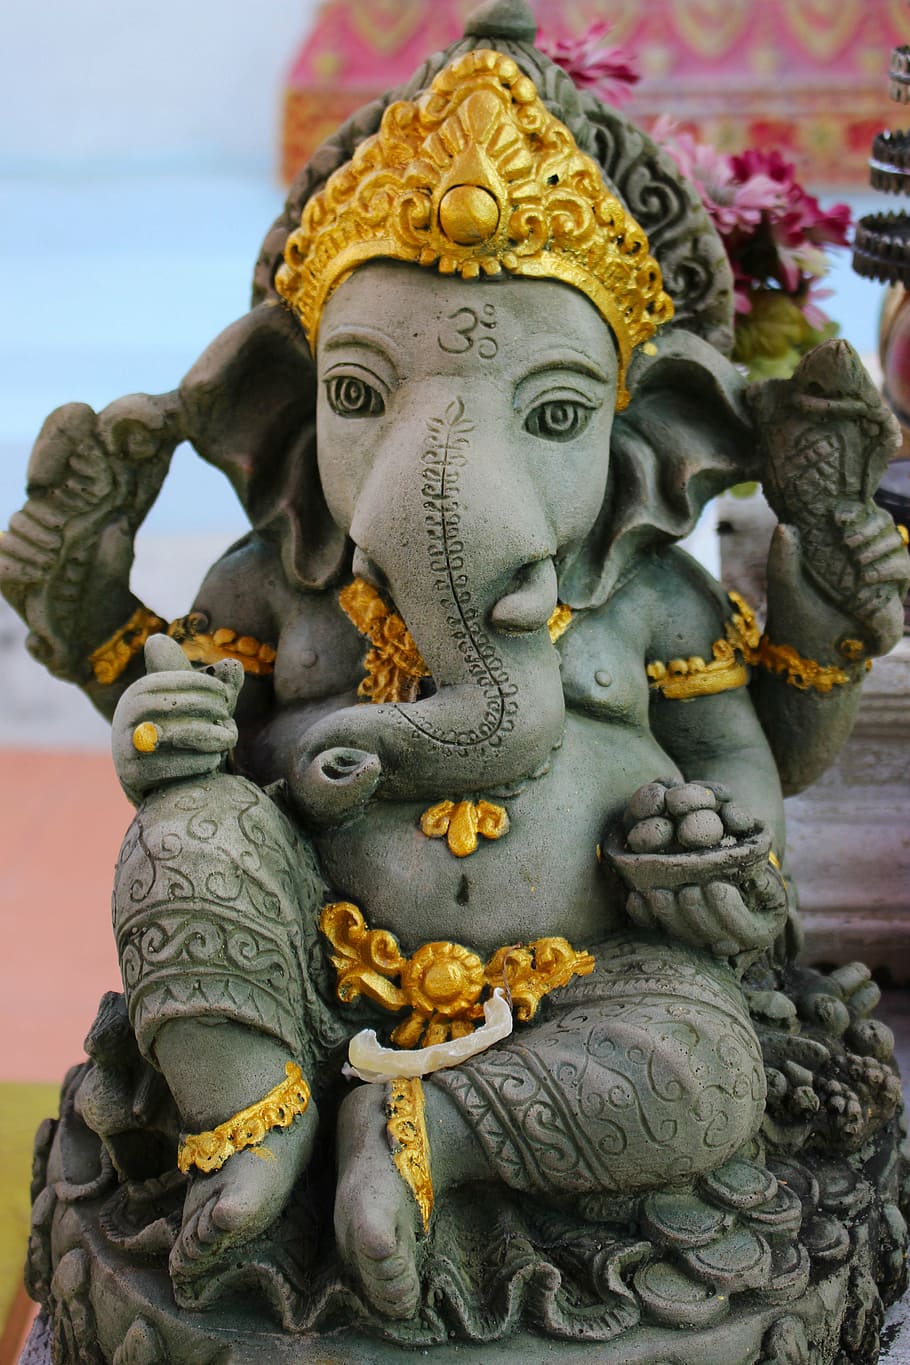 HD wallpaper: Ganesha figurine, statue, lord ganesha